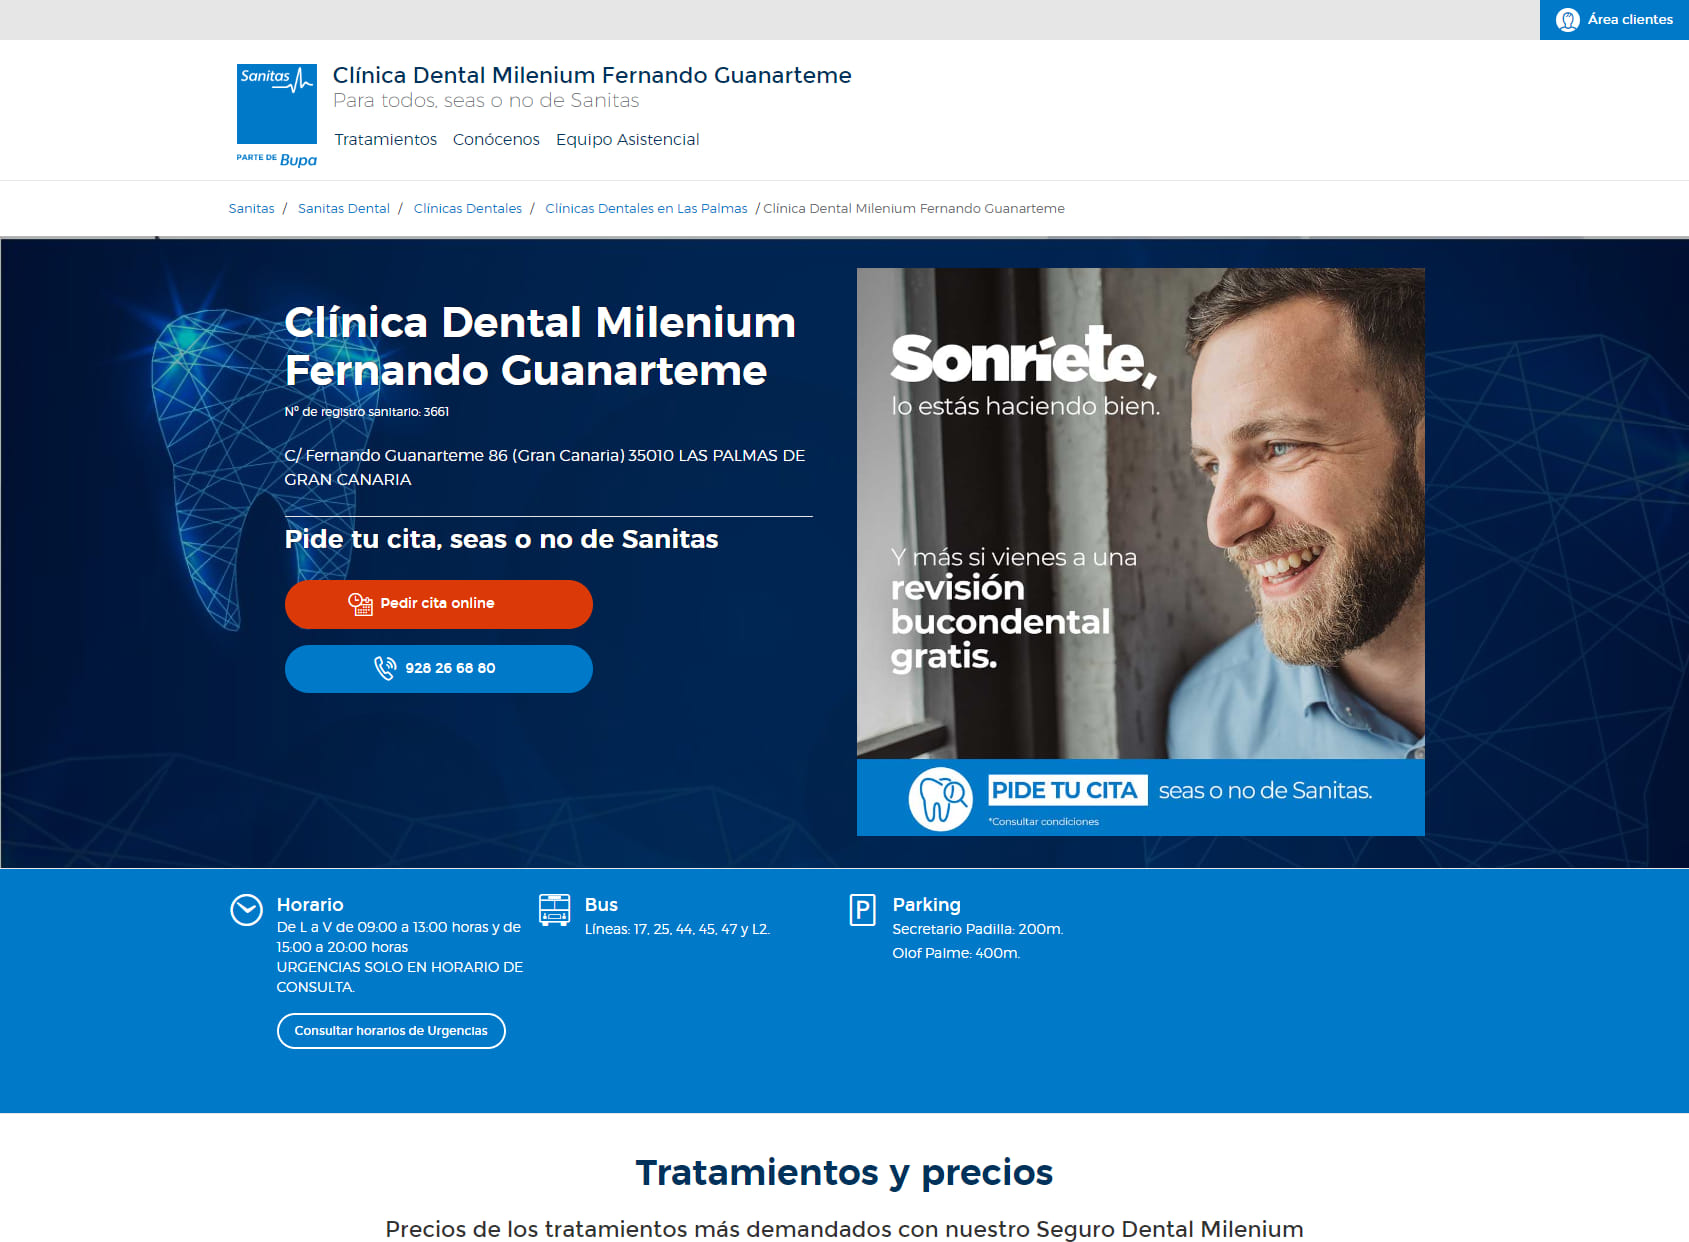 Dentist Las Palmas. Fernando Guanarteme dental clinic